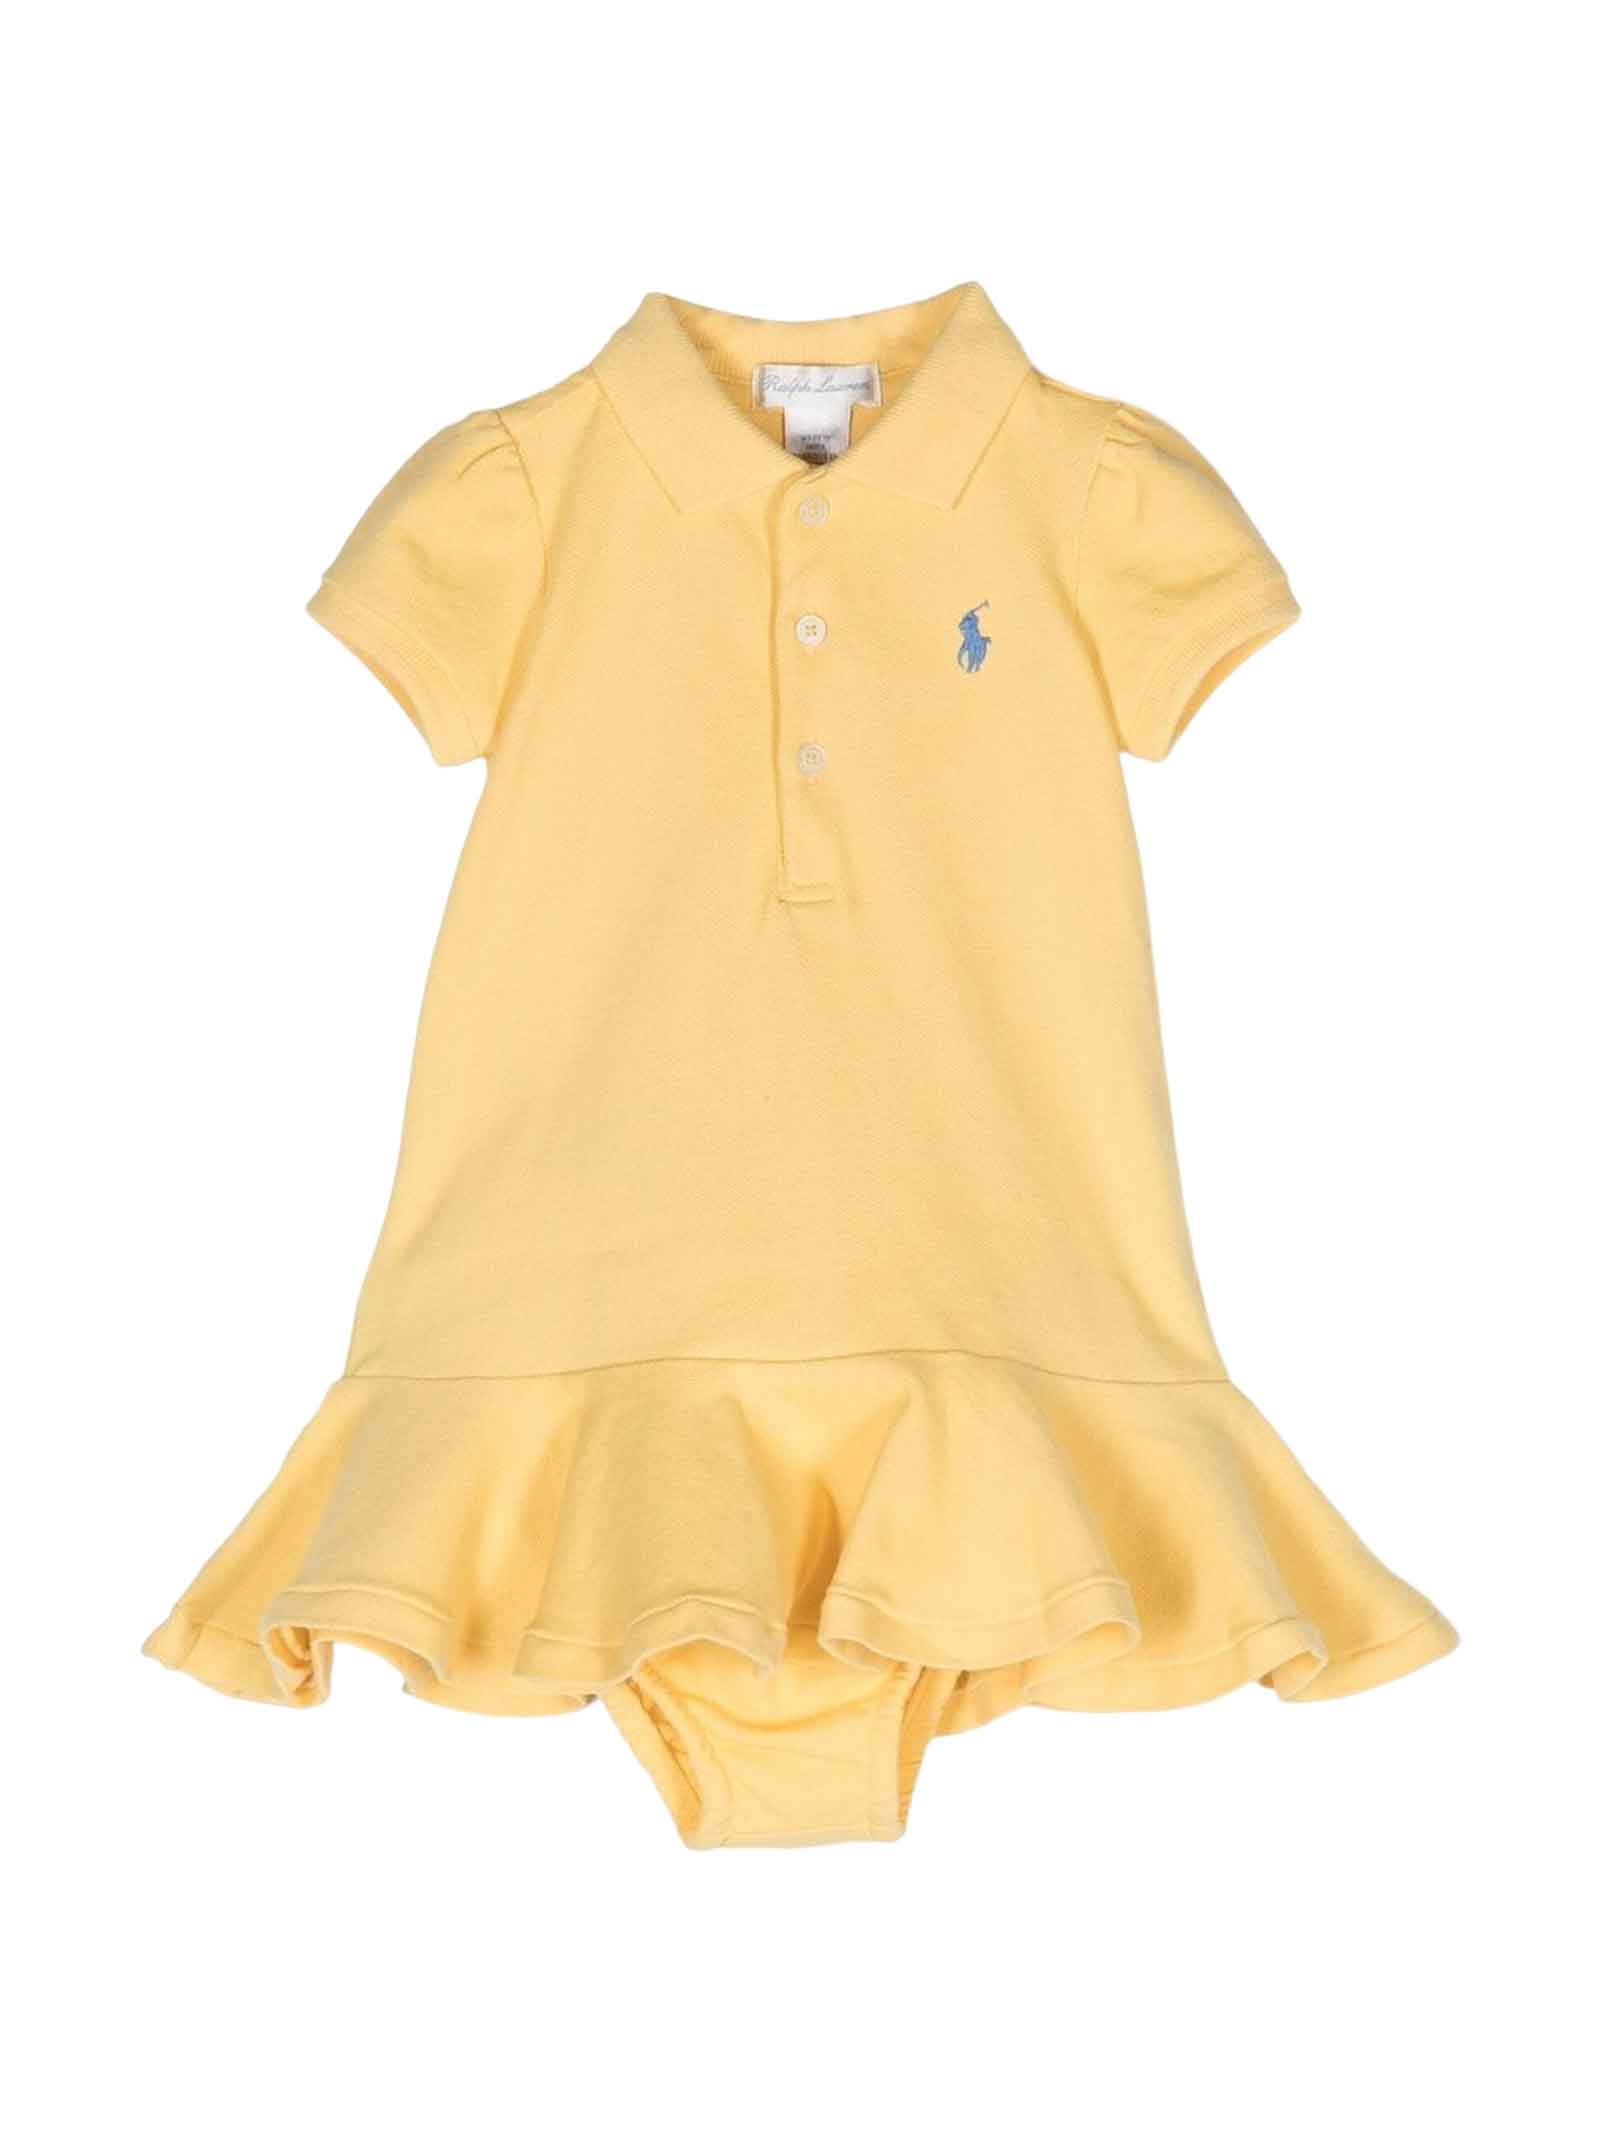 Ralph Lauren Yellow Dress Baby Girl